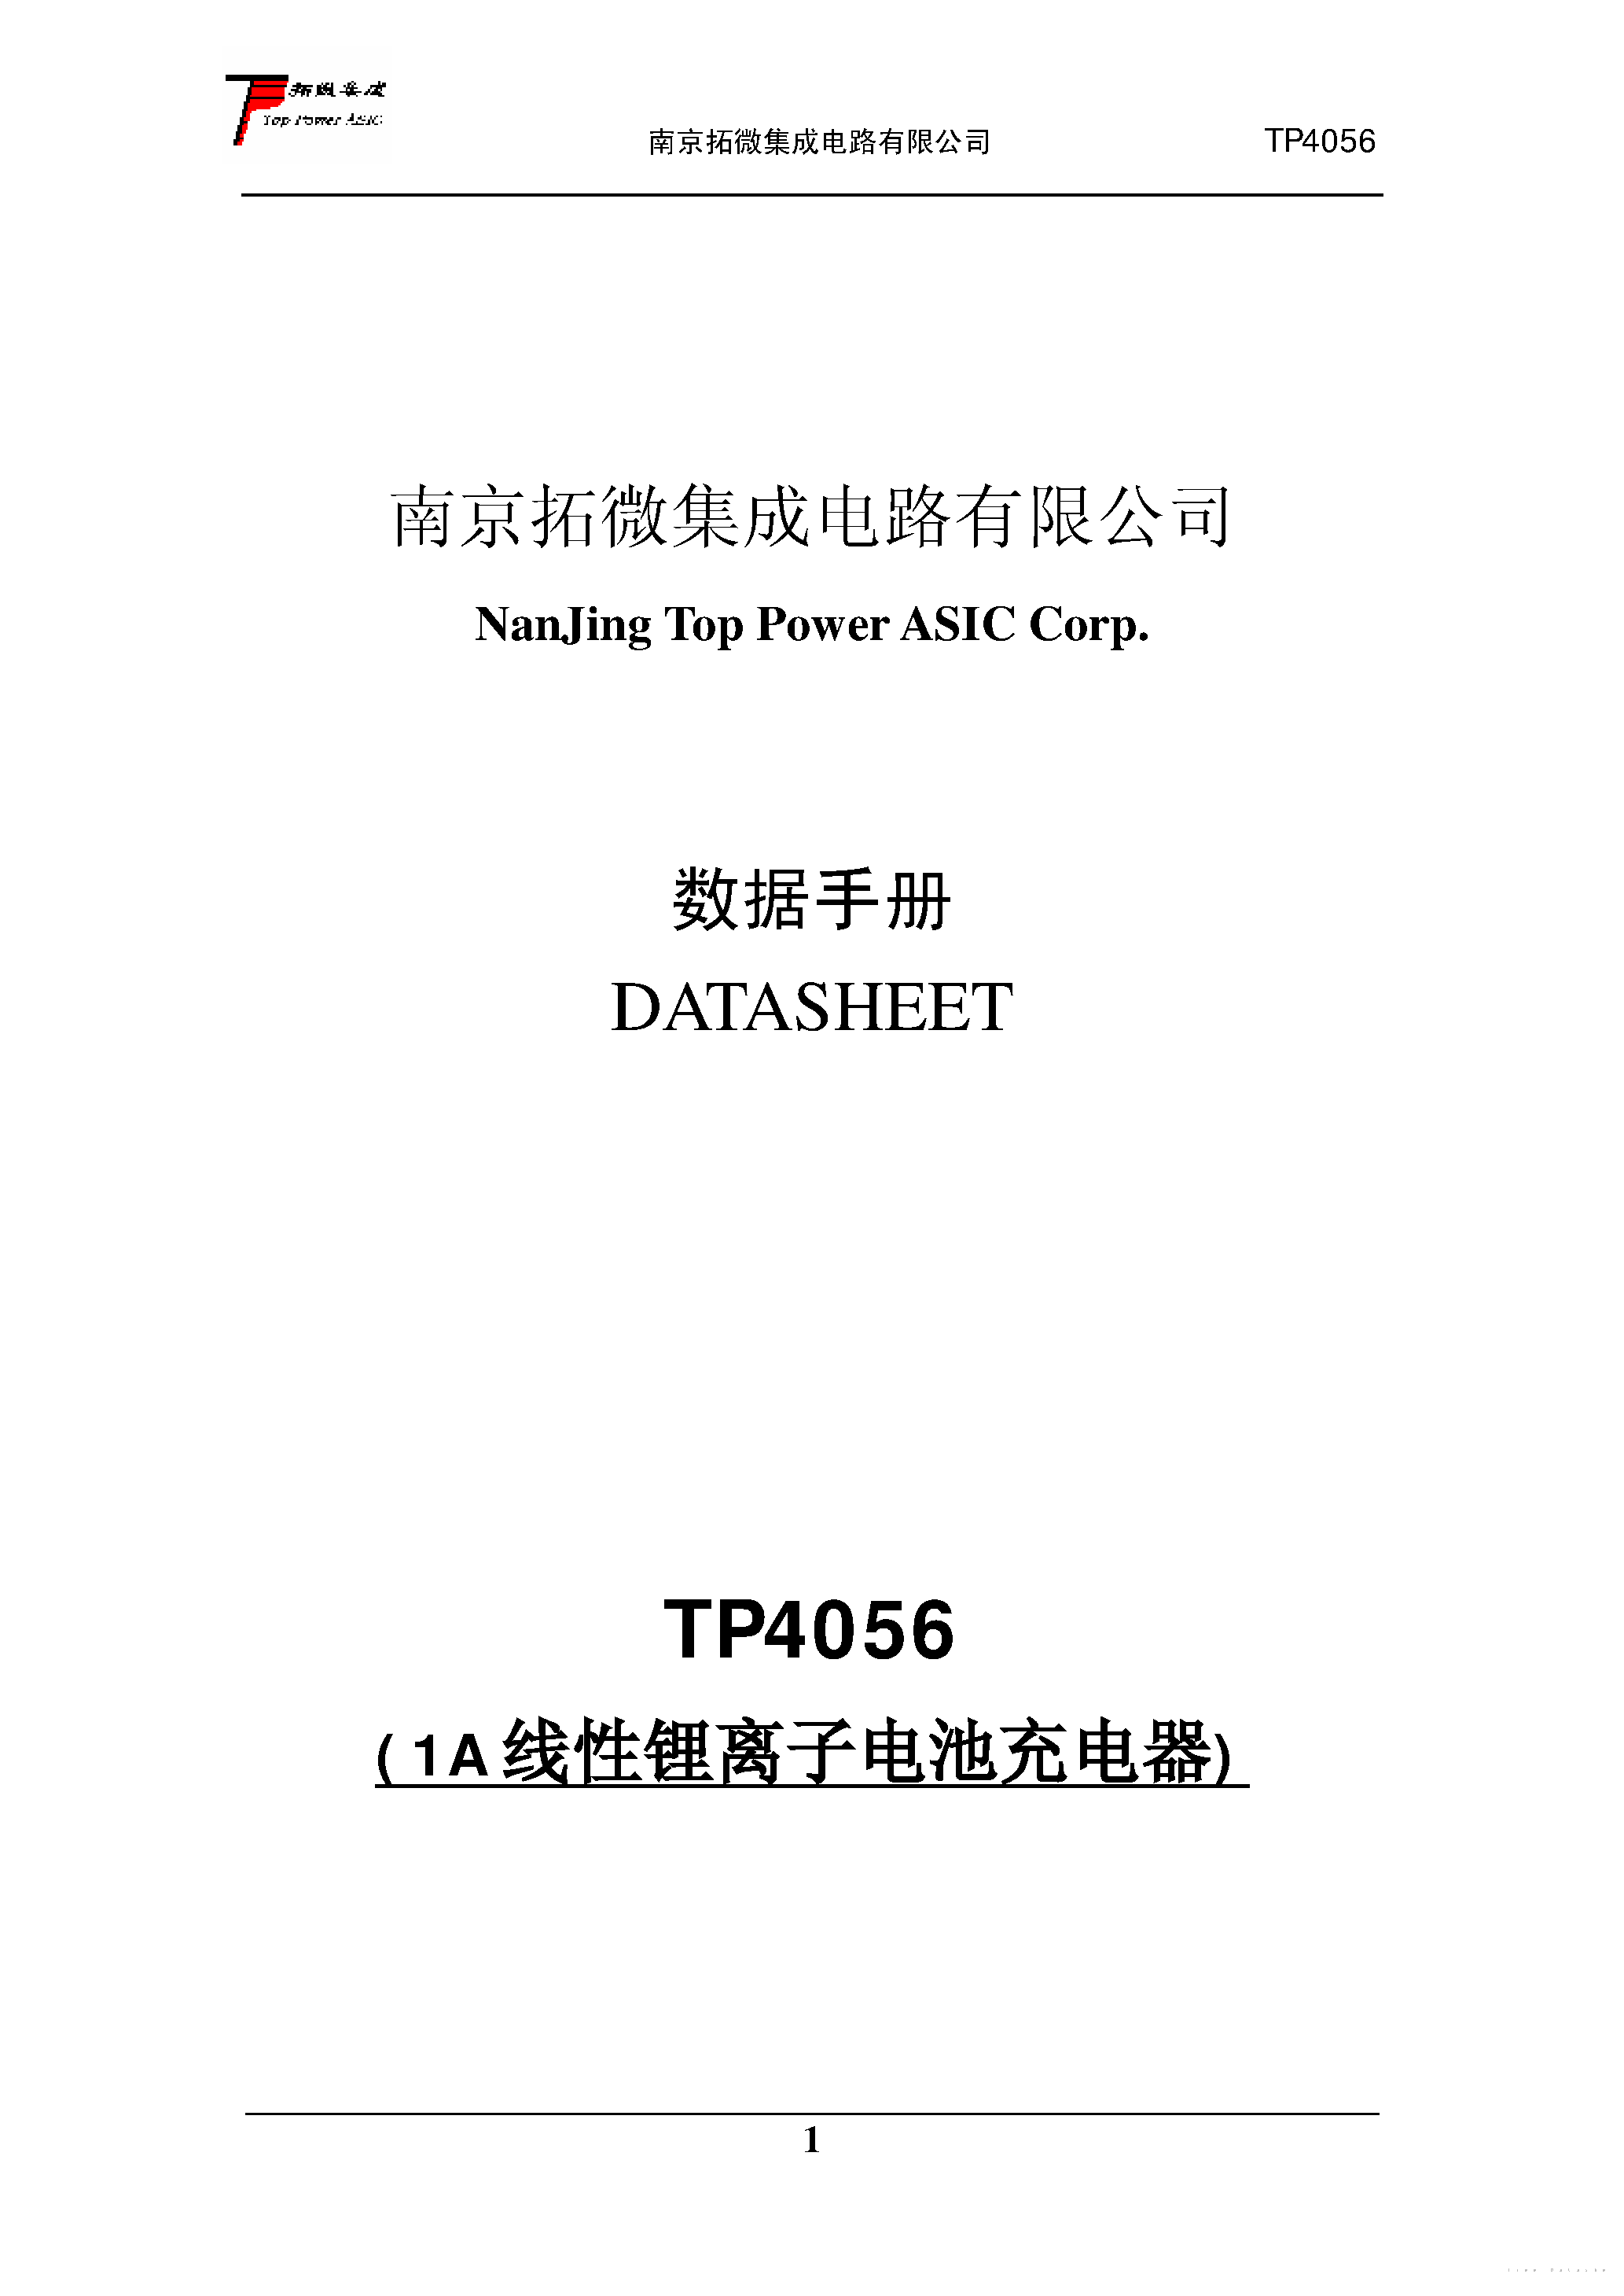 Datasheet TP4056 - page 1